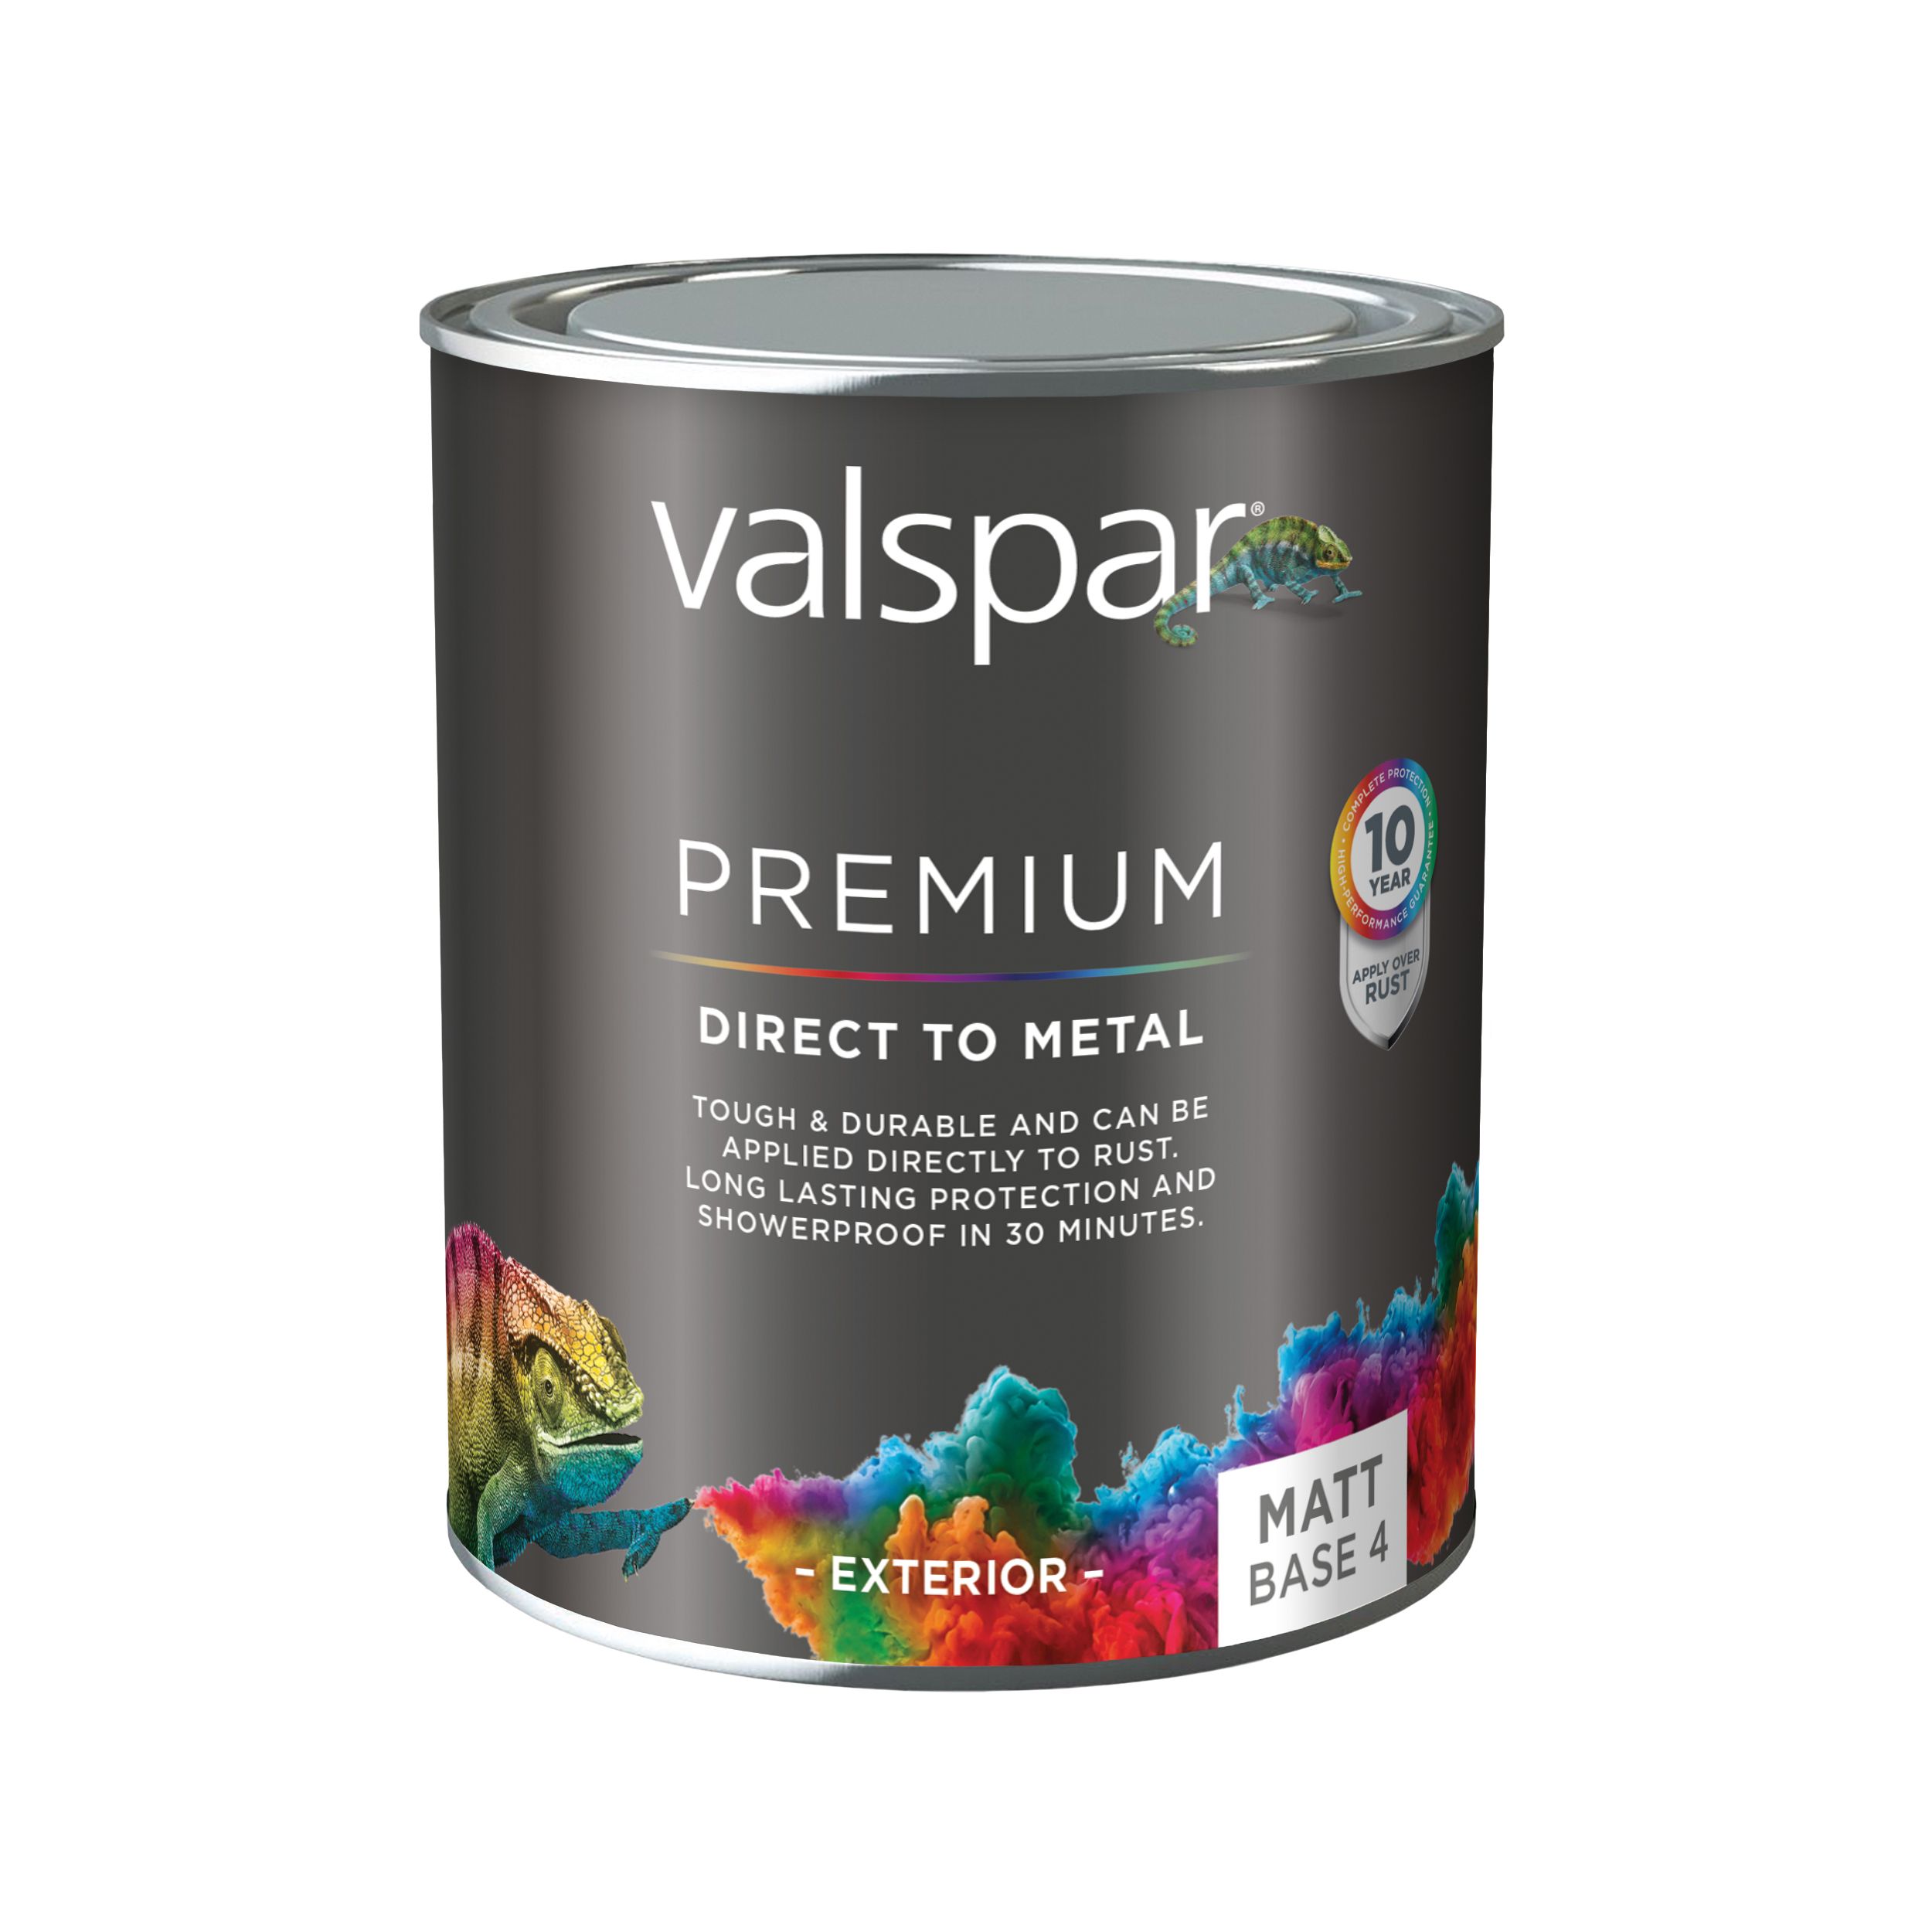 Valspar Premium Direct to Metal Exterior Metal & wood Matt Basecoat, Mixed, Base C, 750ml